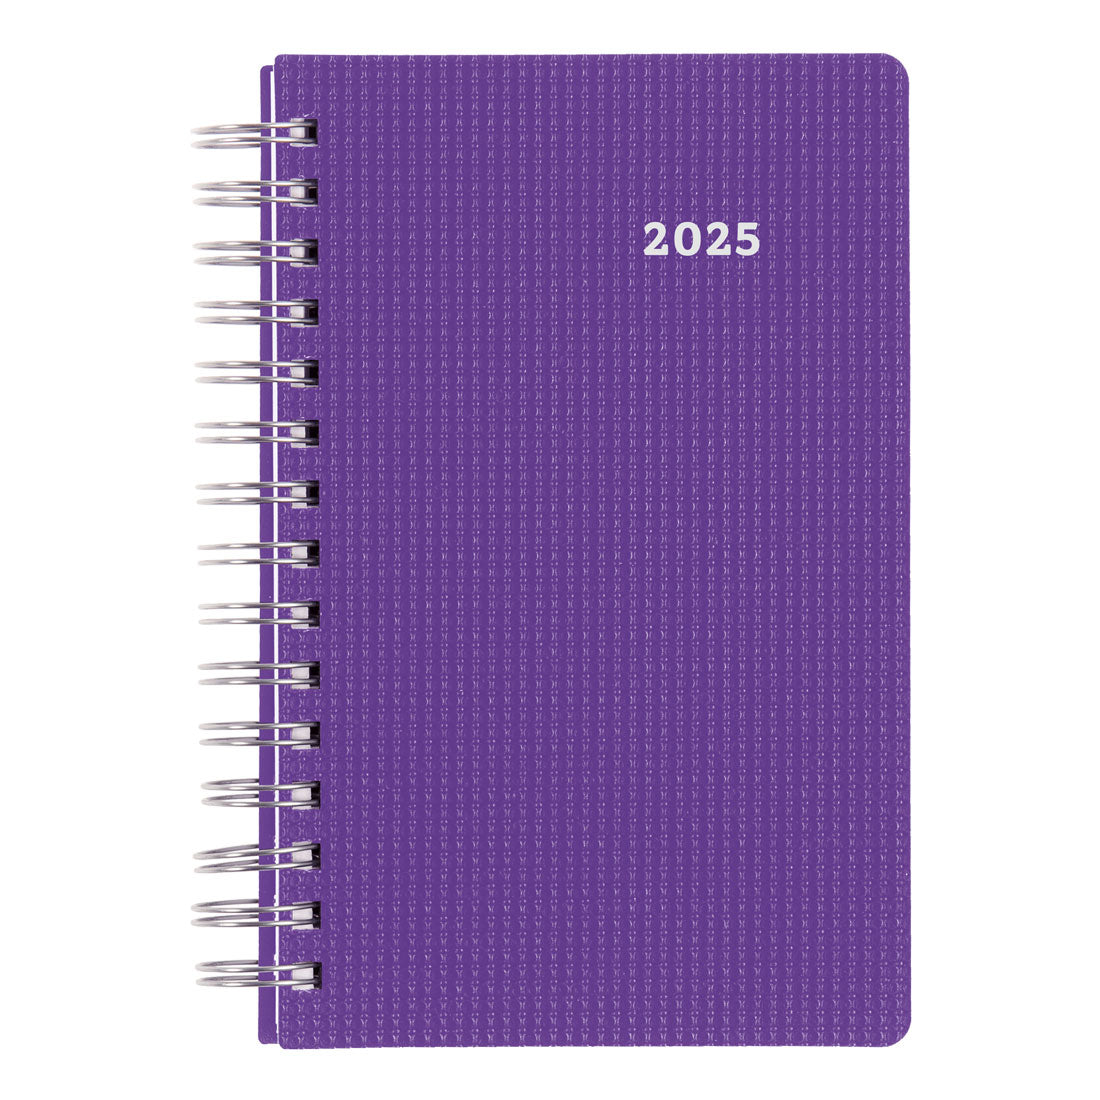 DuraFlex Daily Planner 2025, English, CB634V.PUR#colour_purple